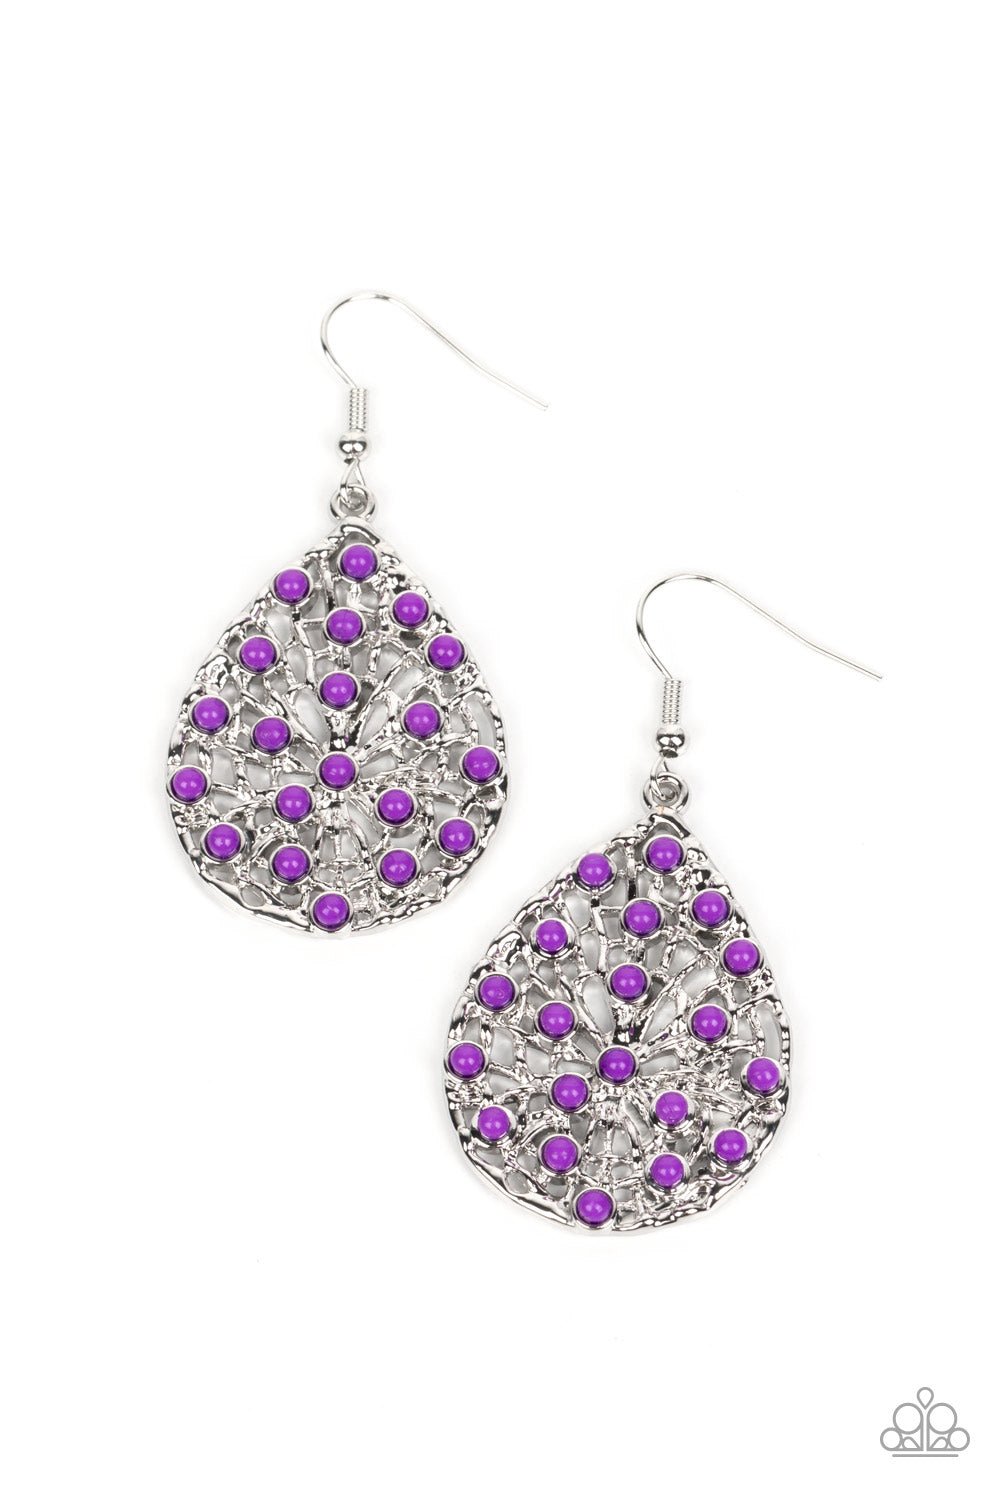 Botanical Berries - purple - Paparazzi earrings